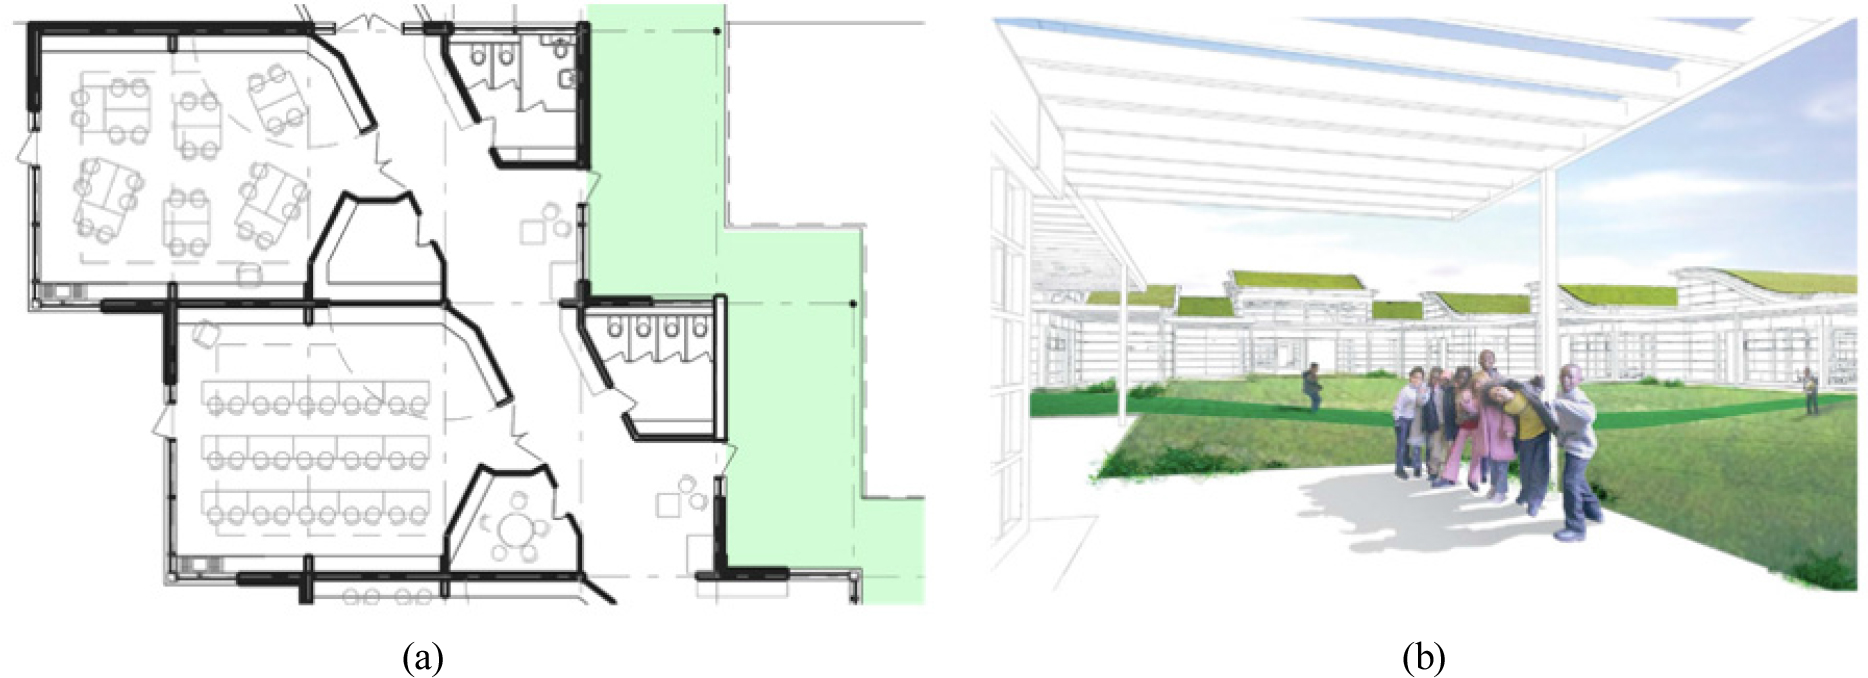 school design concept layout plan